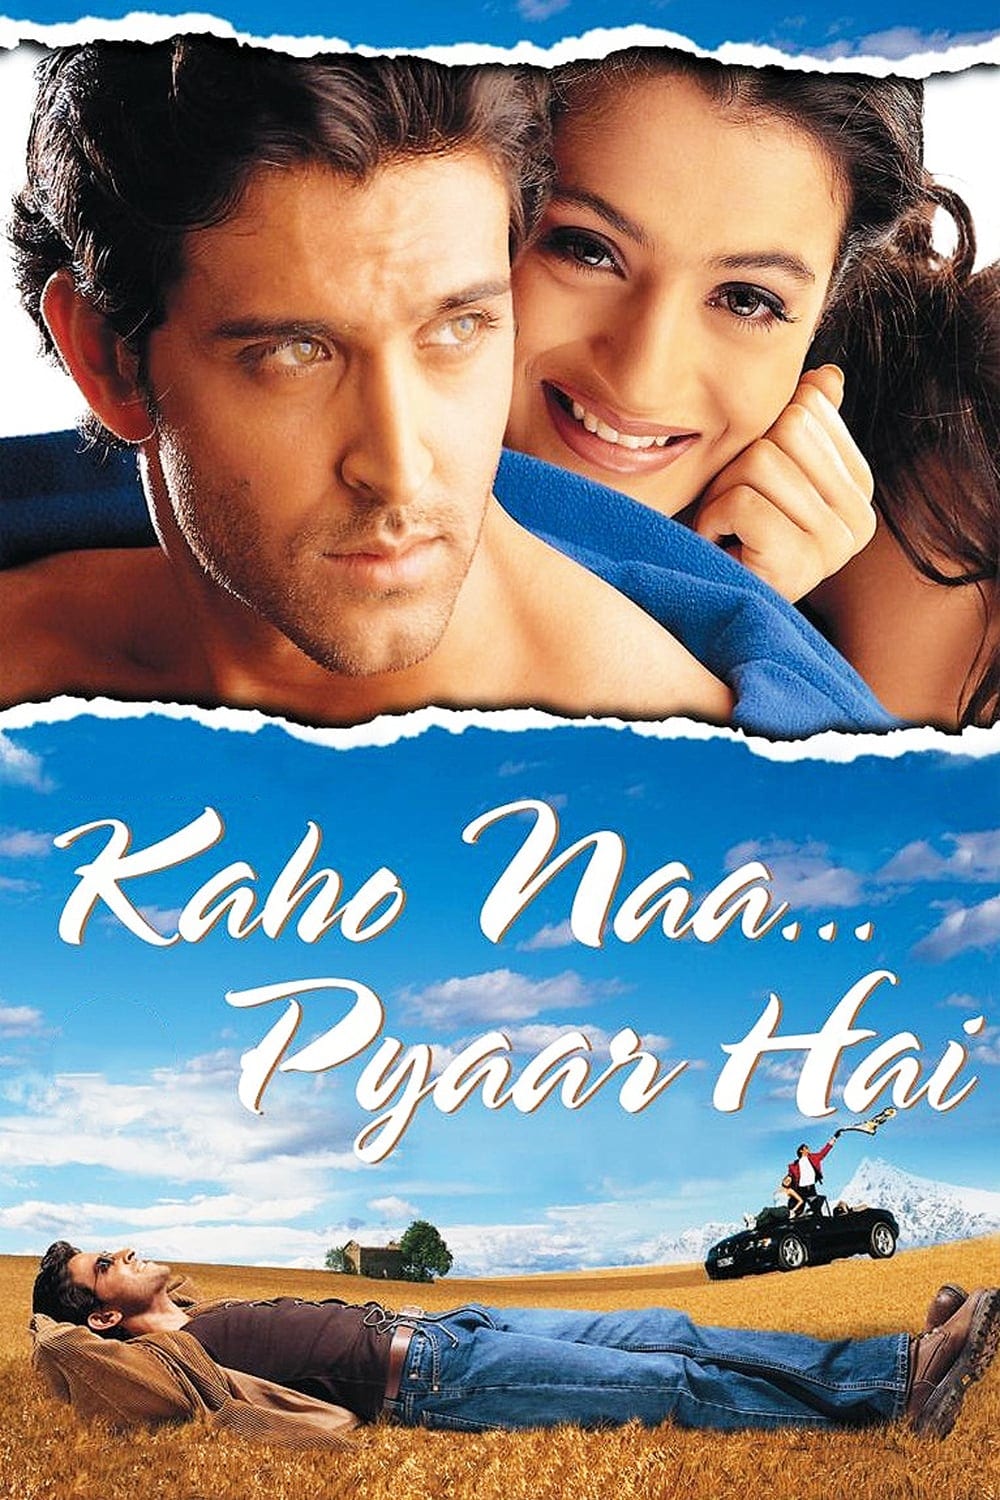 Poster for the movie "Kaho Naa... Pyaar Hai"